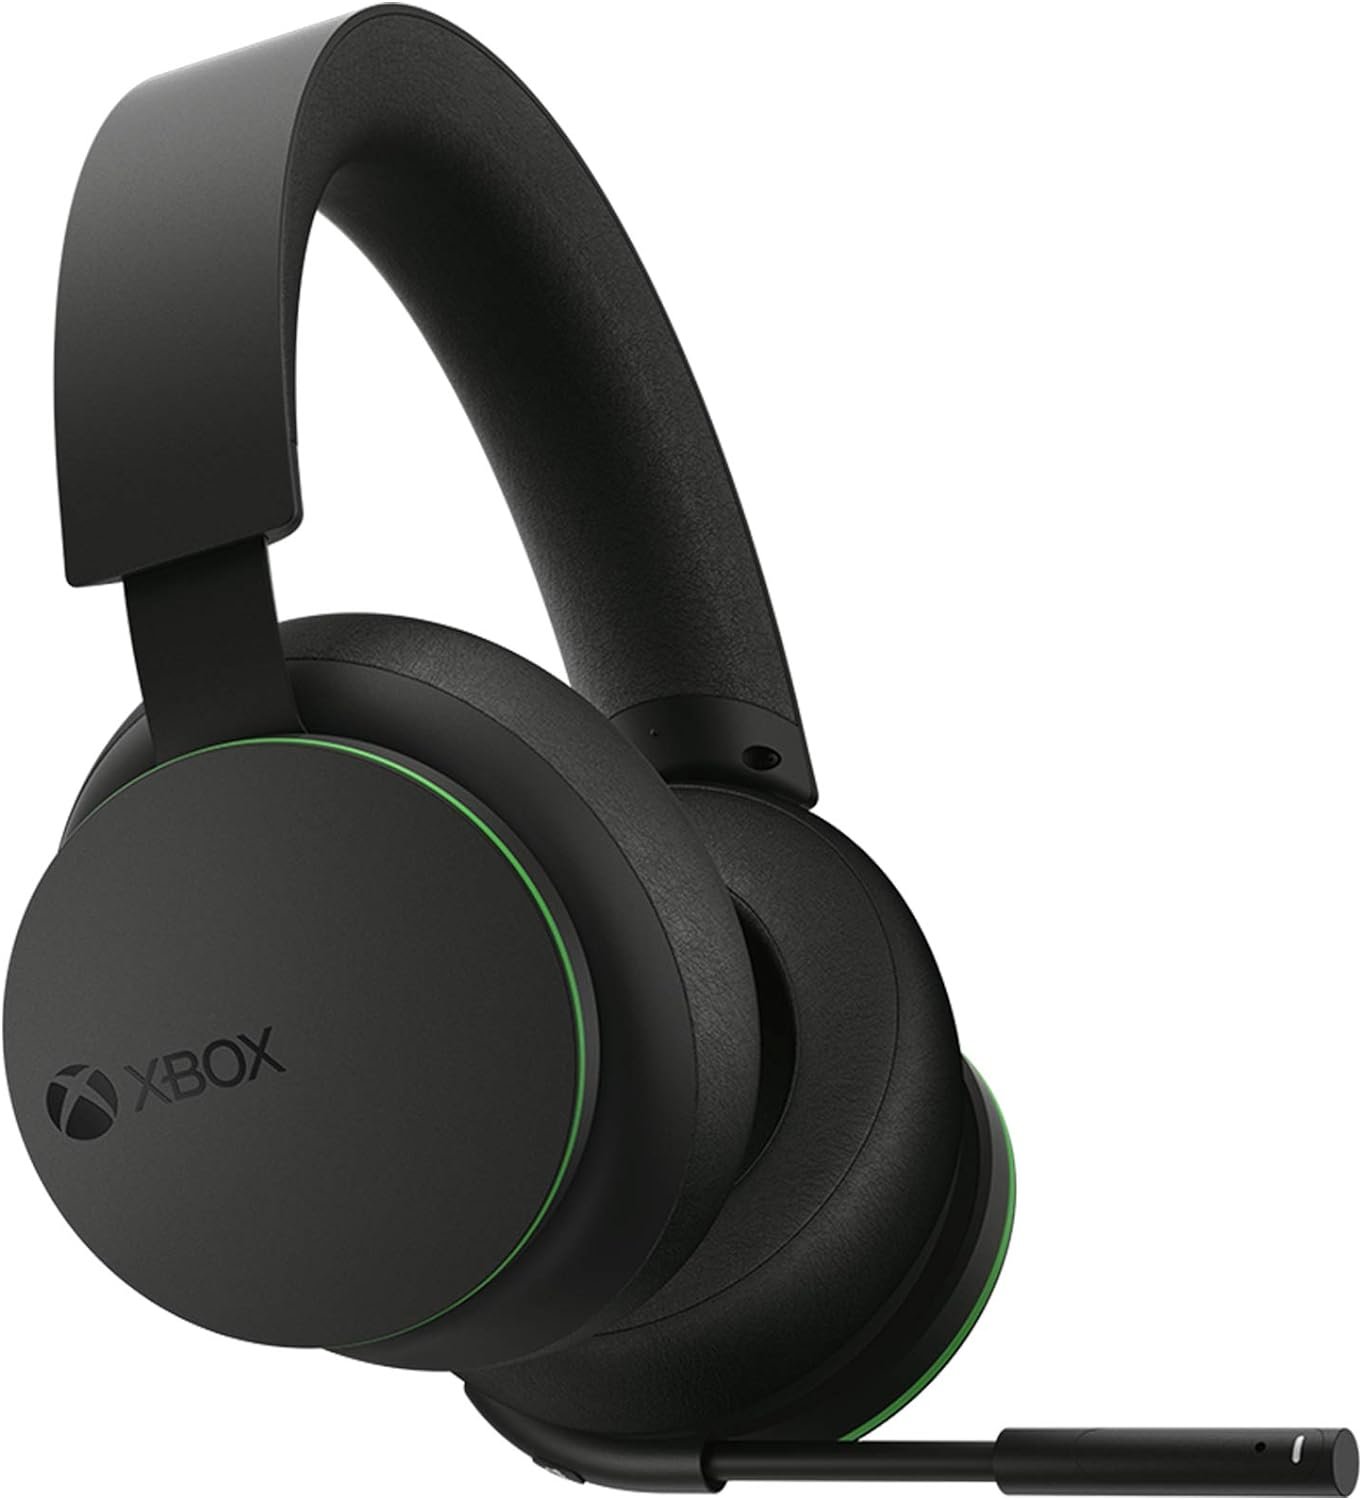 Xbox Wireless Headset - Melhores headsets, segundo clientes da Amazon